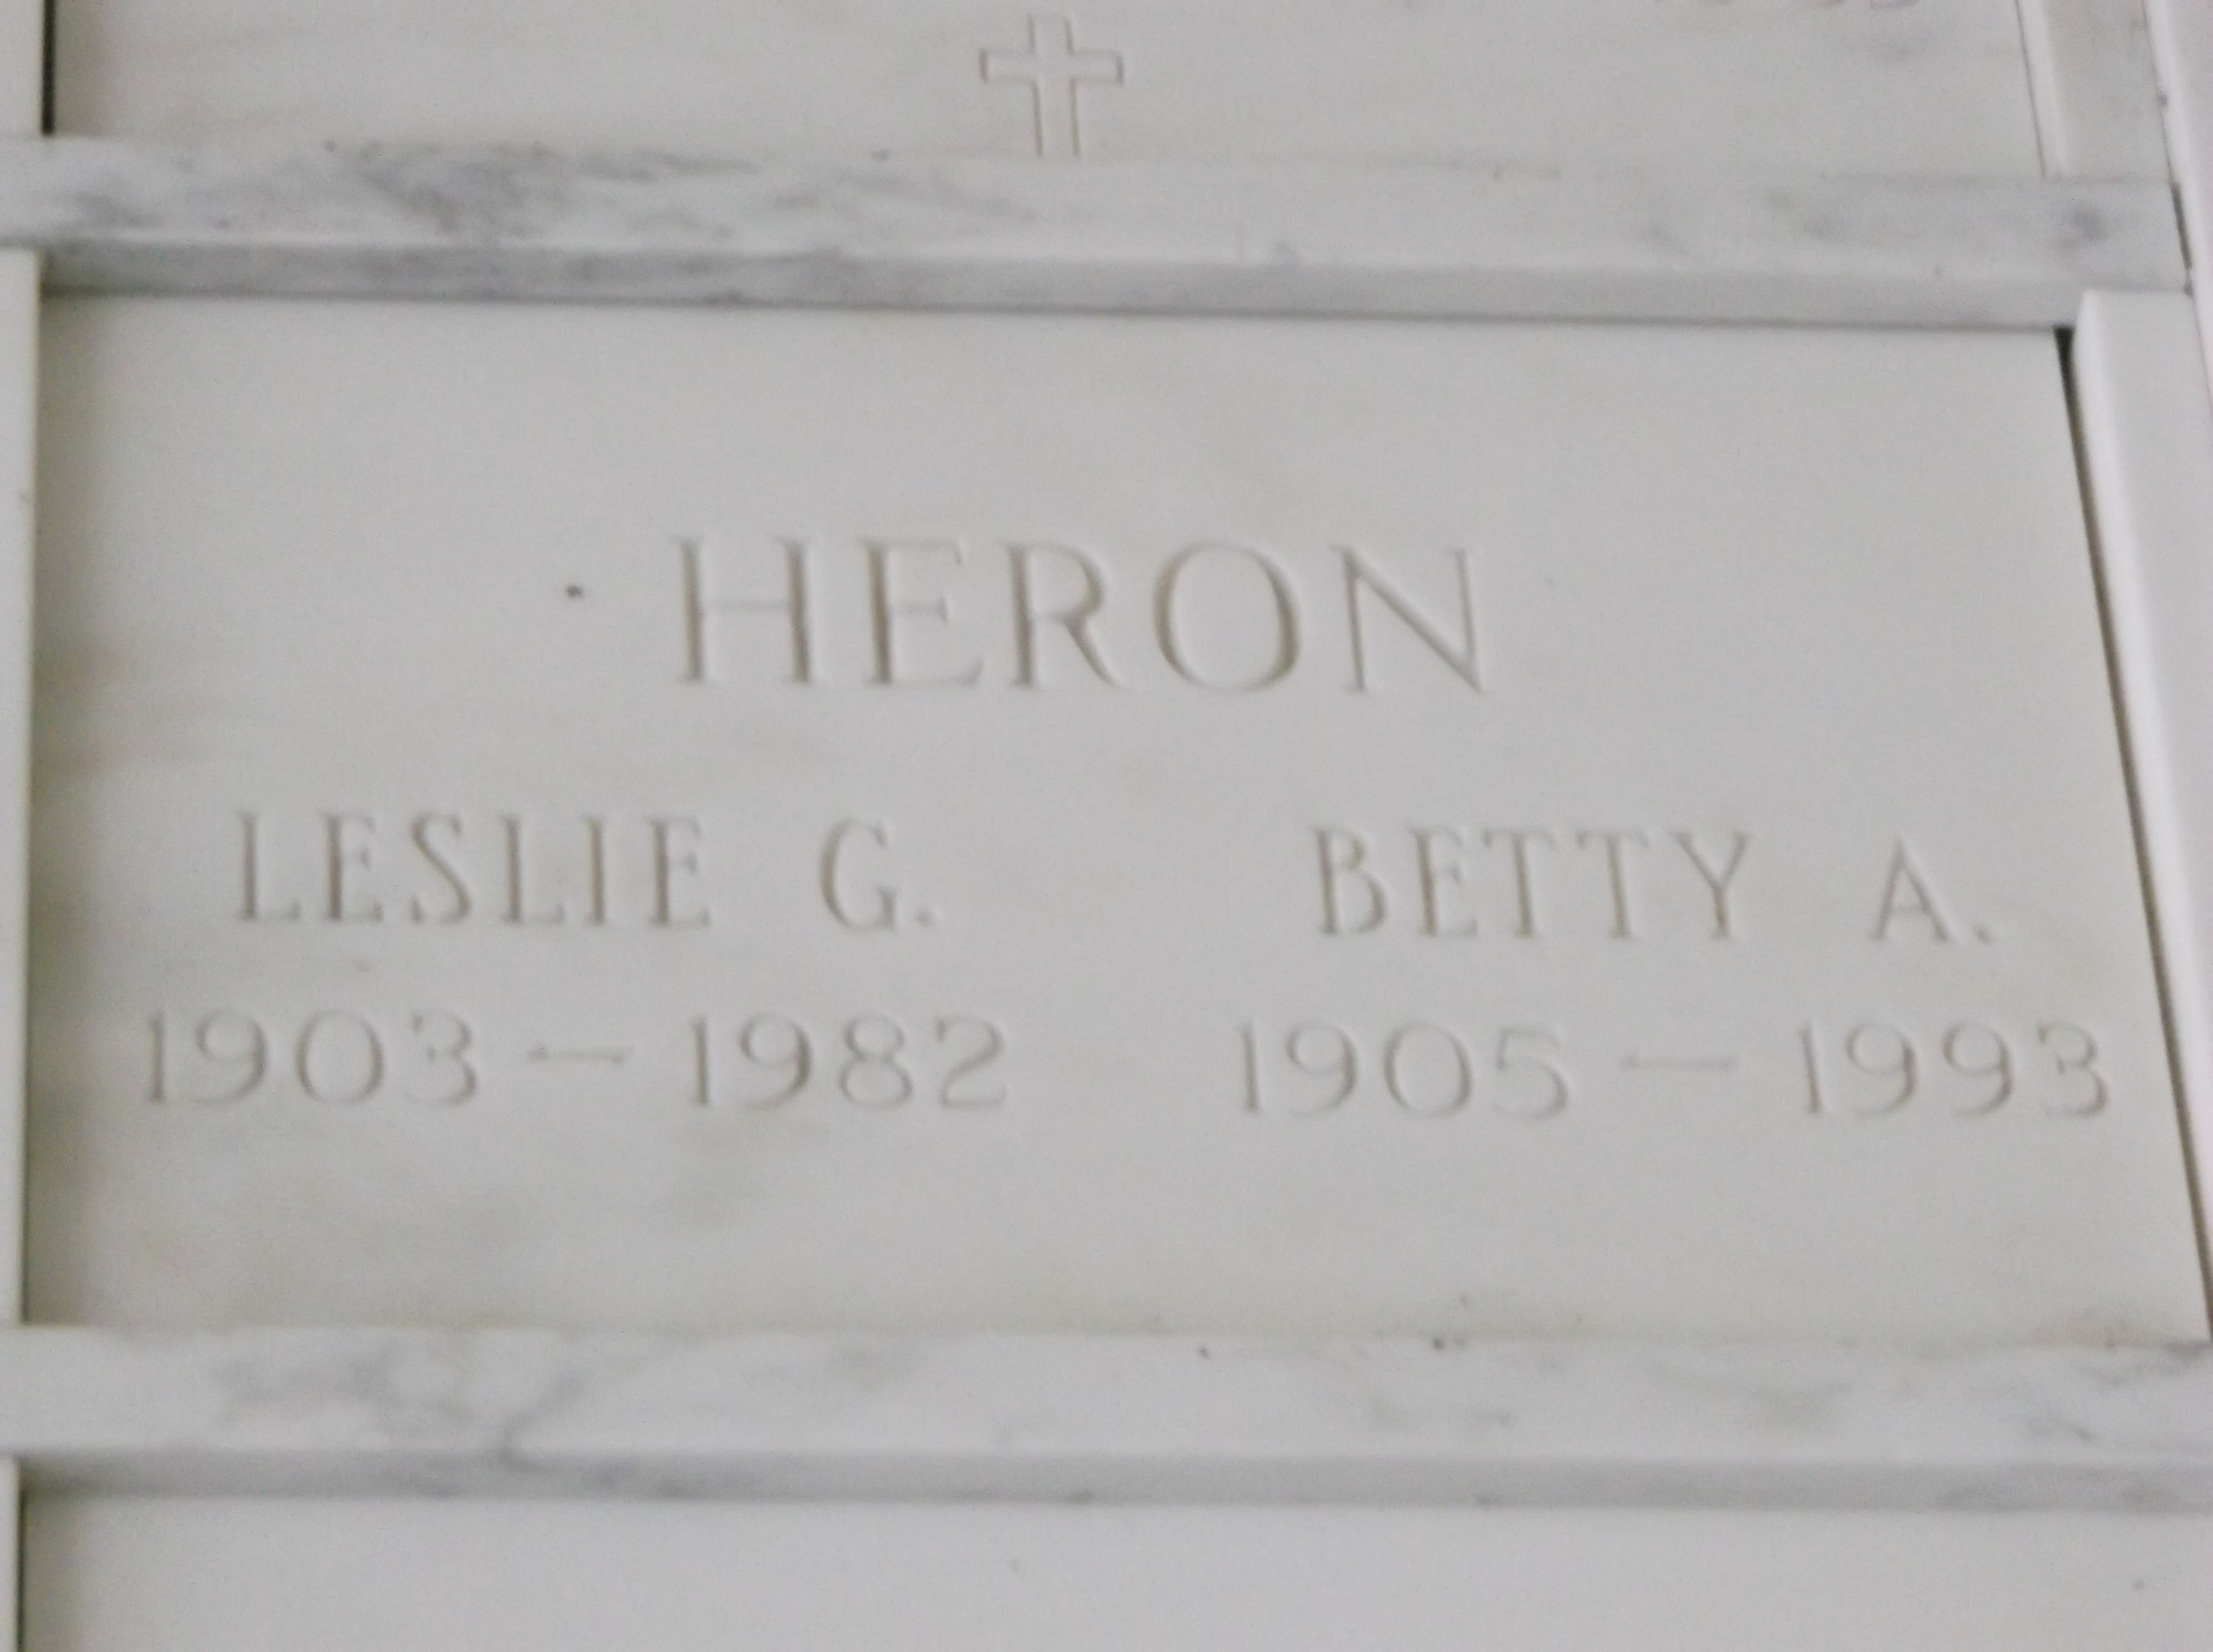 Betty A Heron